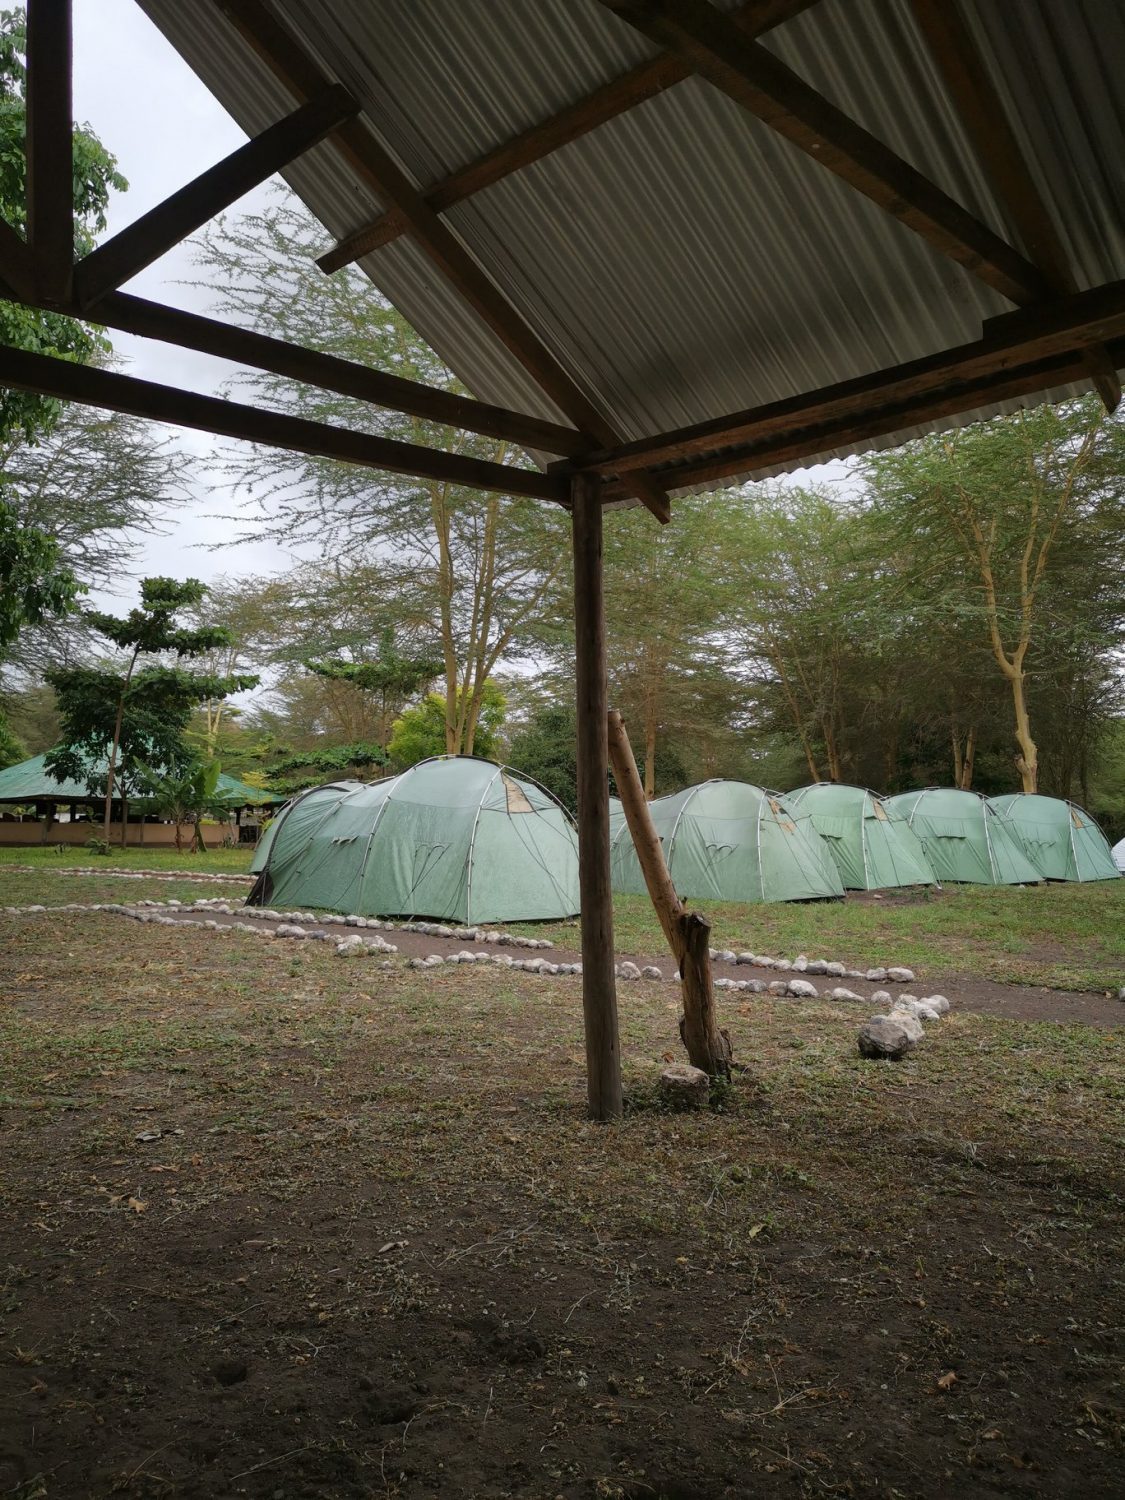 Camping Tanzania safari